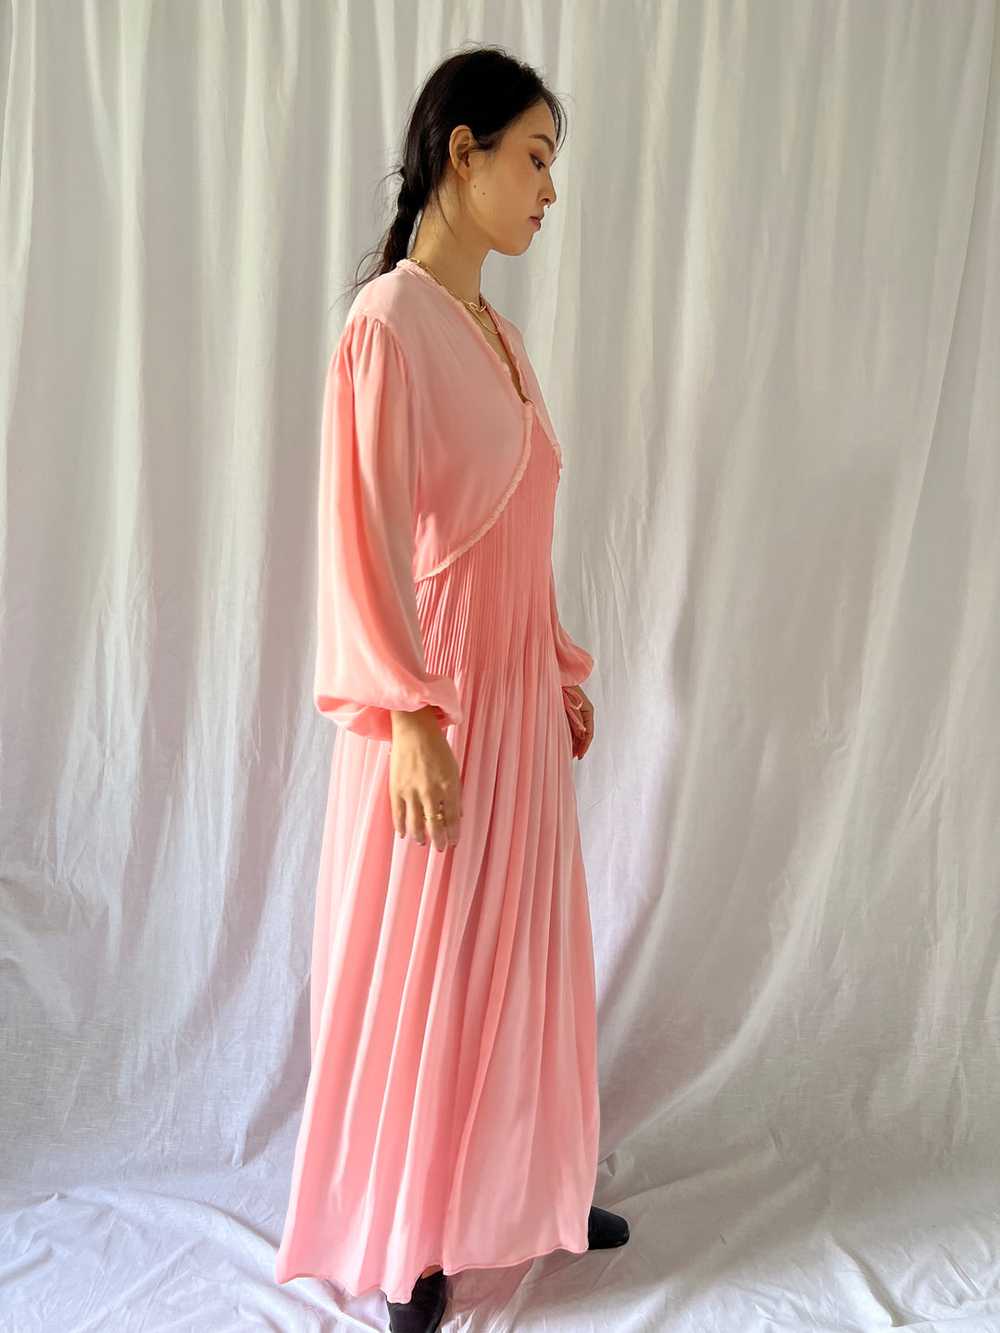 Vintage 30s pink dress long balloon sleeves - image 4